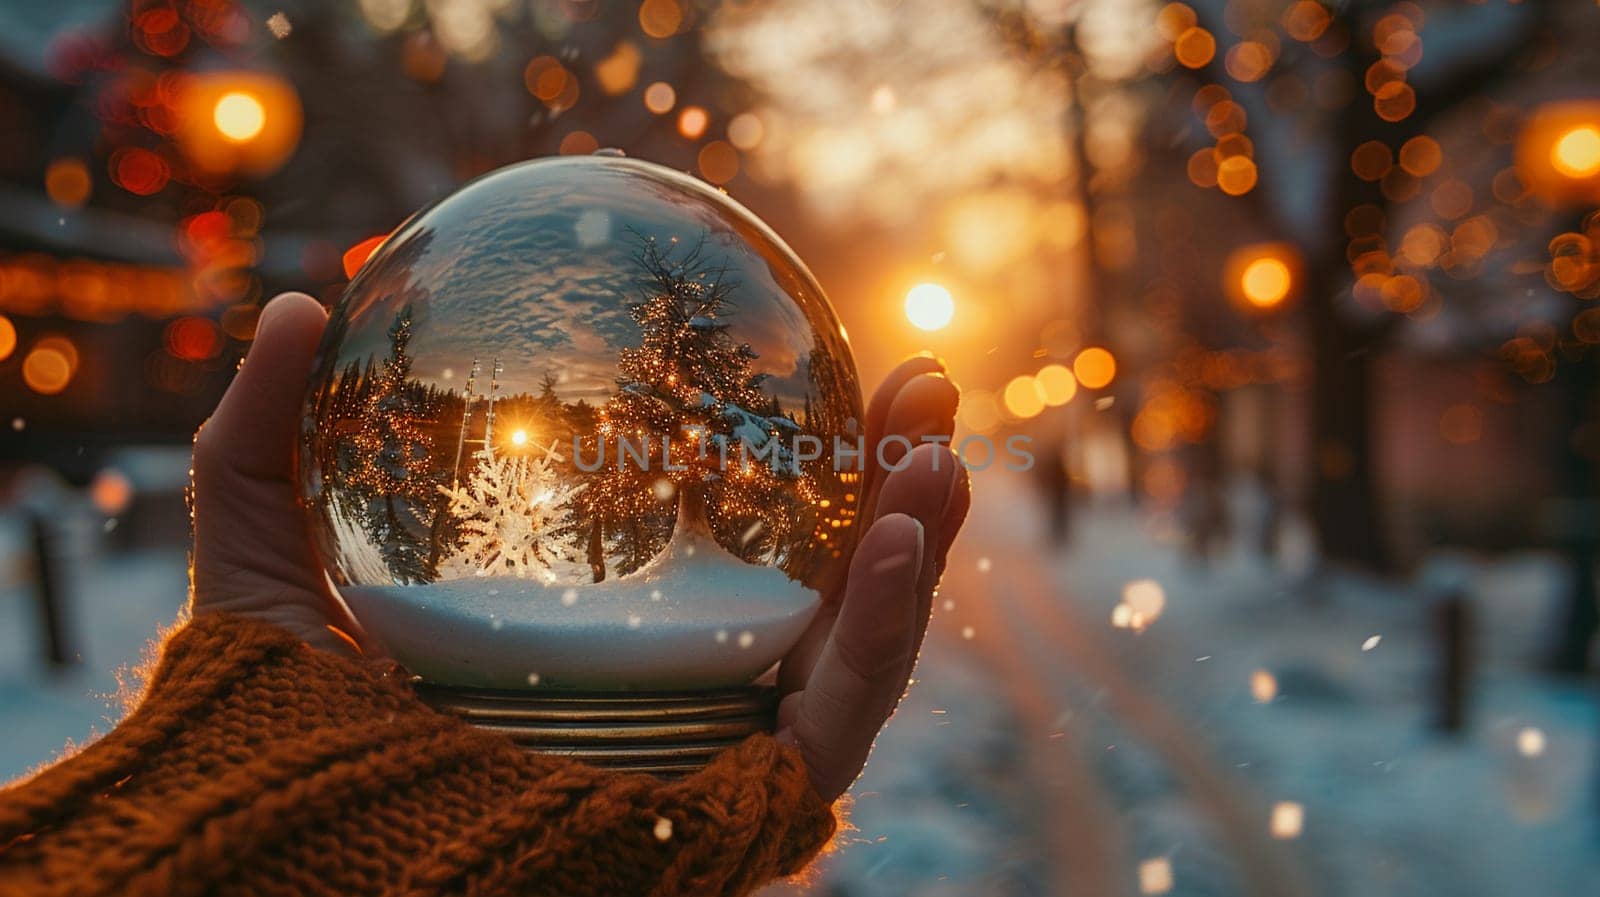 Hand holding a snow globe evoking nostalgia by Benzoix